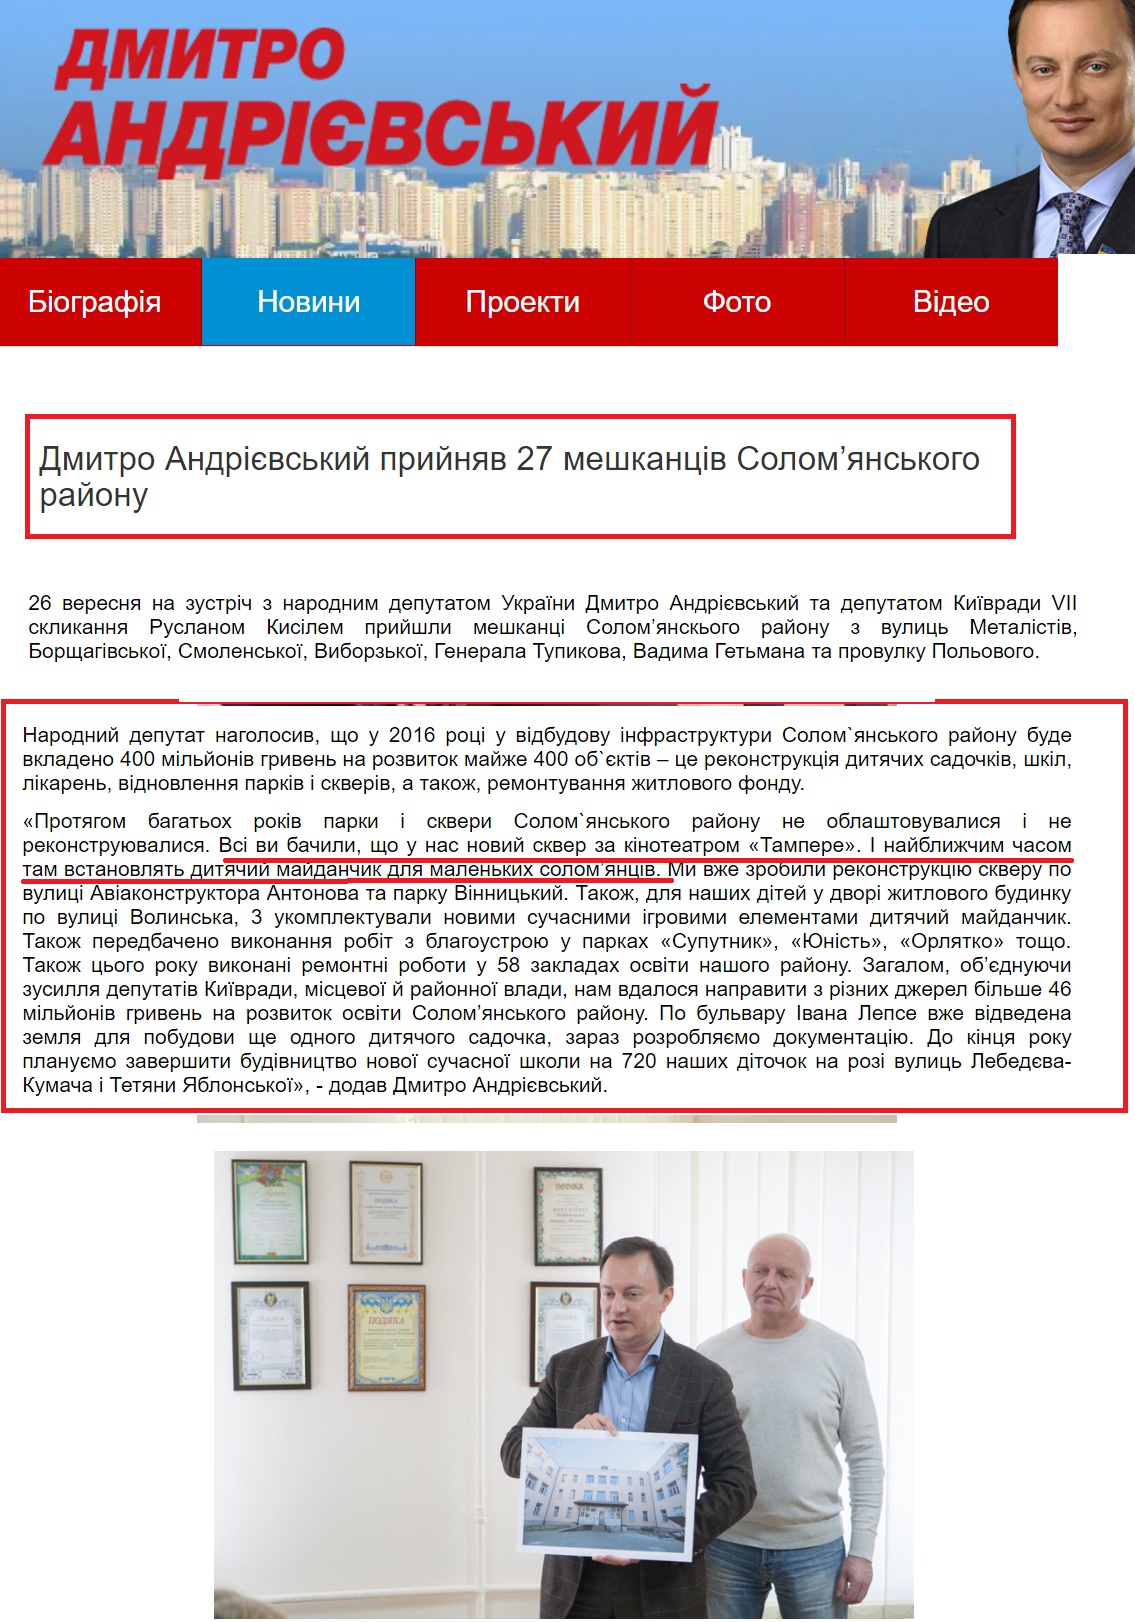 http://www.andrievsky.kiev.ua/news/dmitro-andr-vskii-razom-z-komandoiu-deputat-v-ki-vradi-priv-tali-osv-tian-solom-ianskogo-raionu-z-profes-inim-sviatom